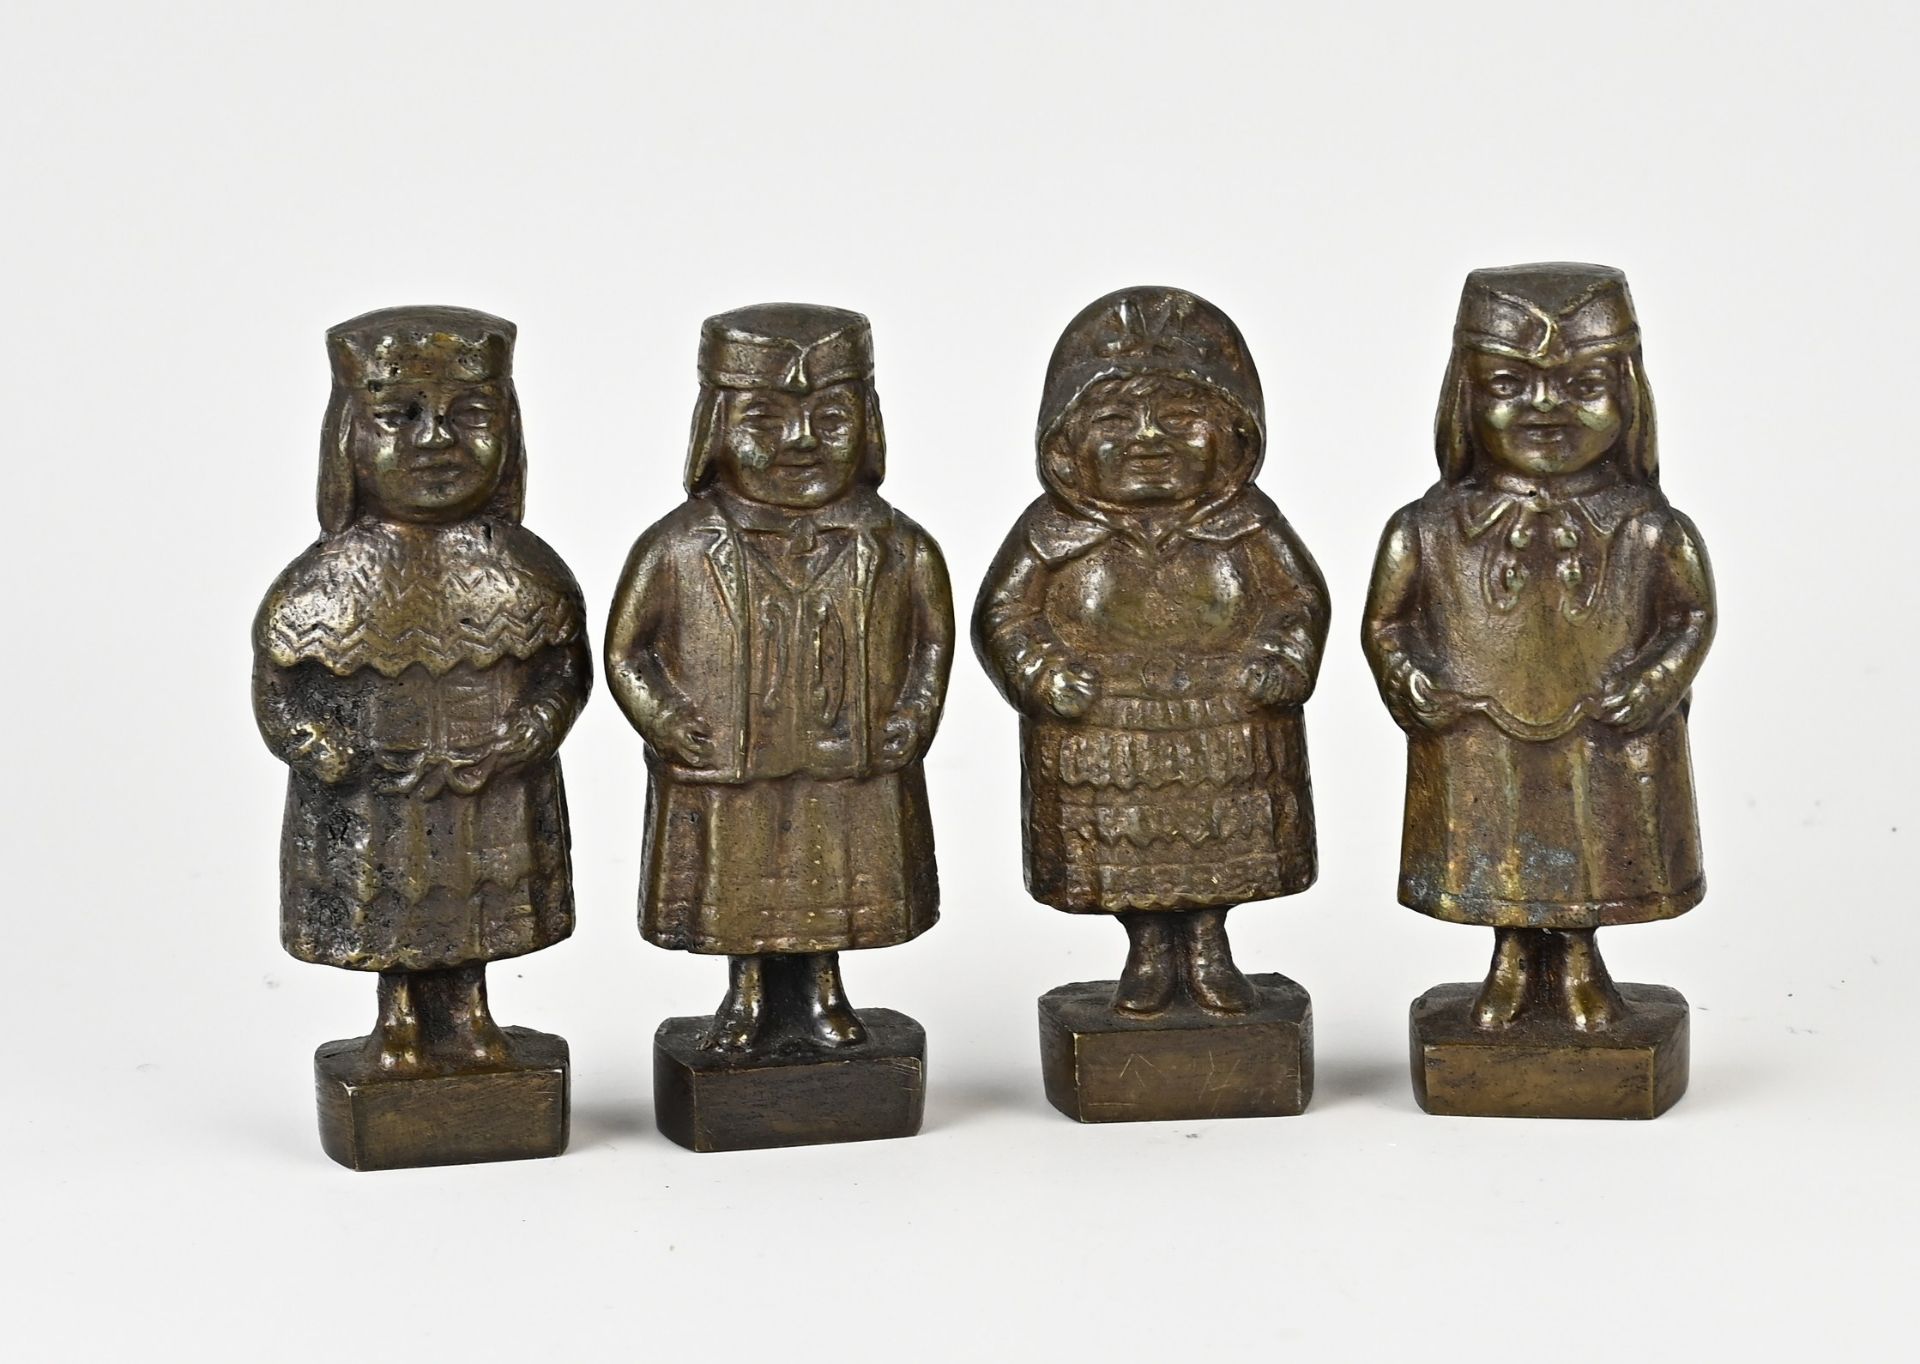 Four bronze figures